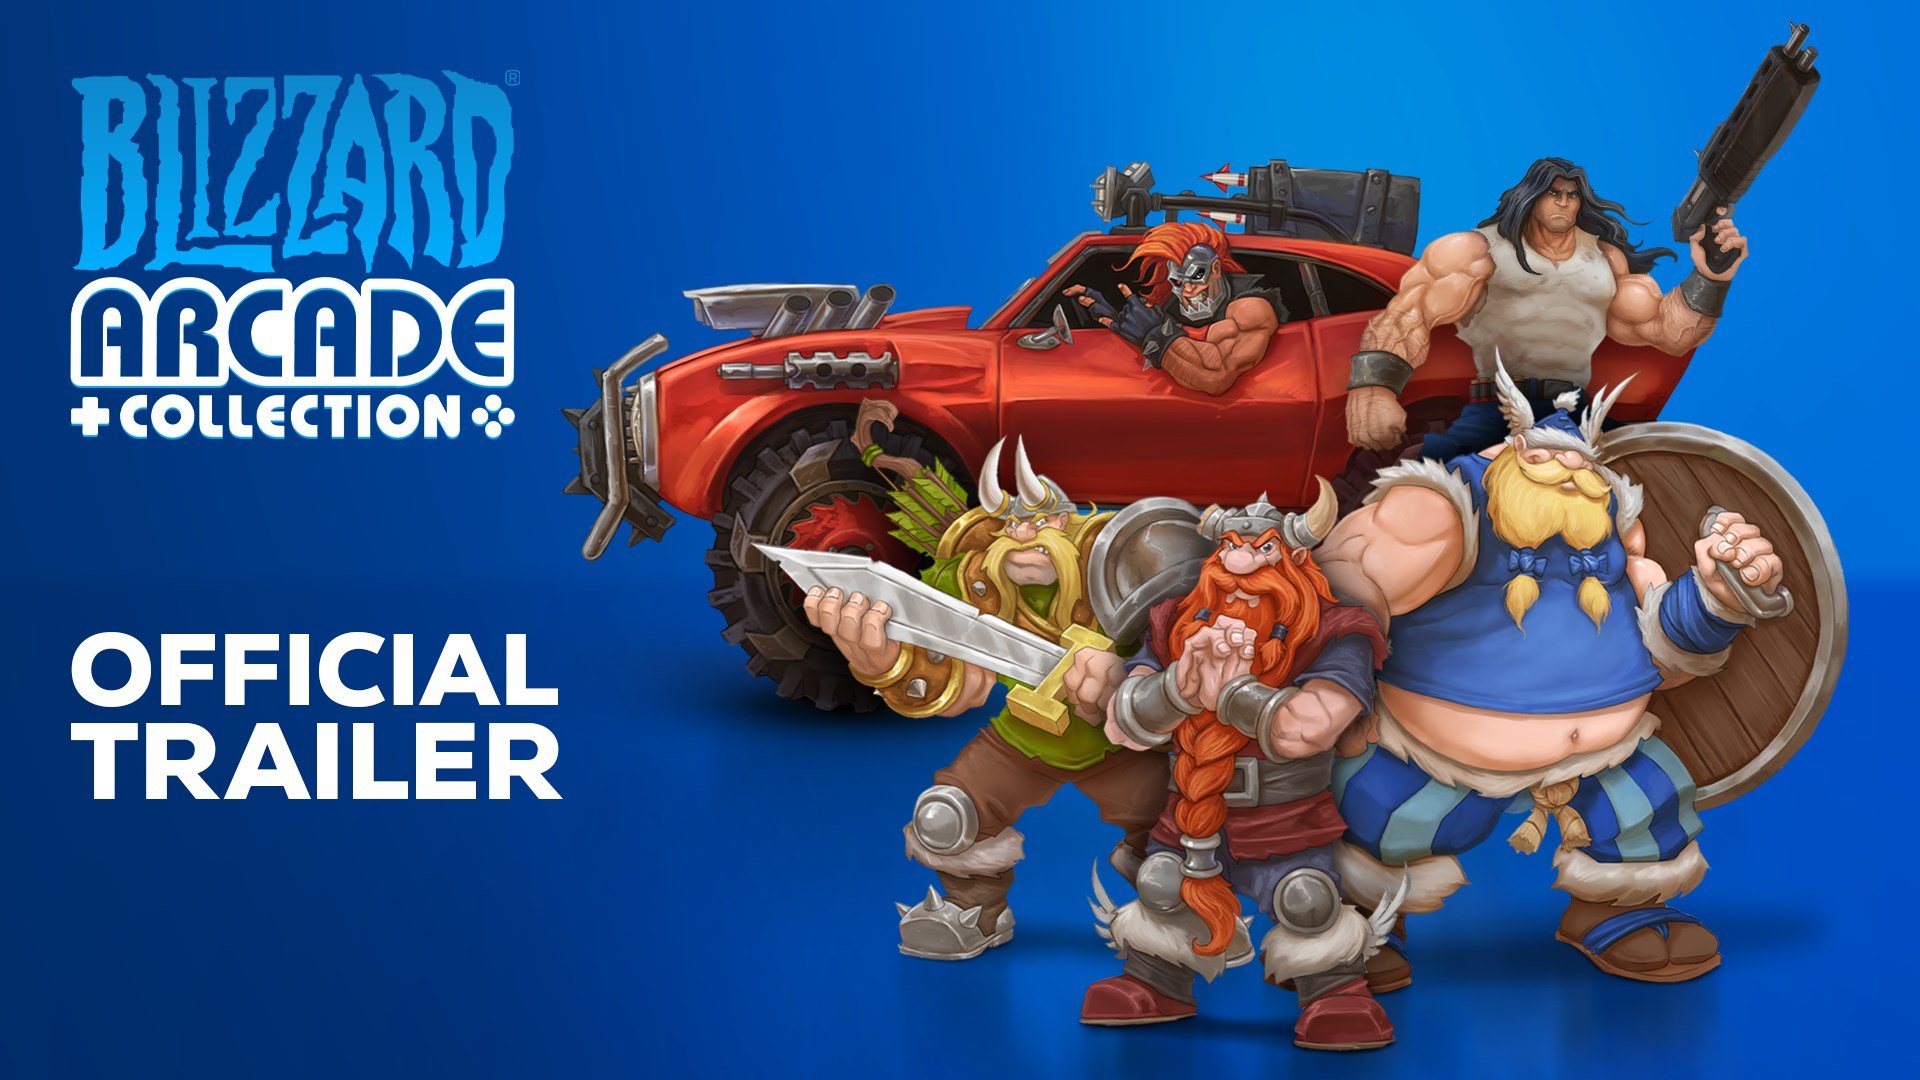 Blizzard® Arcade Collection cover image